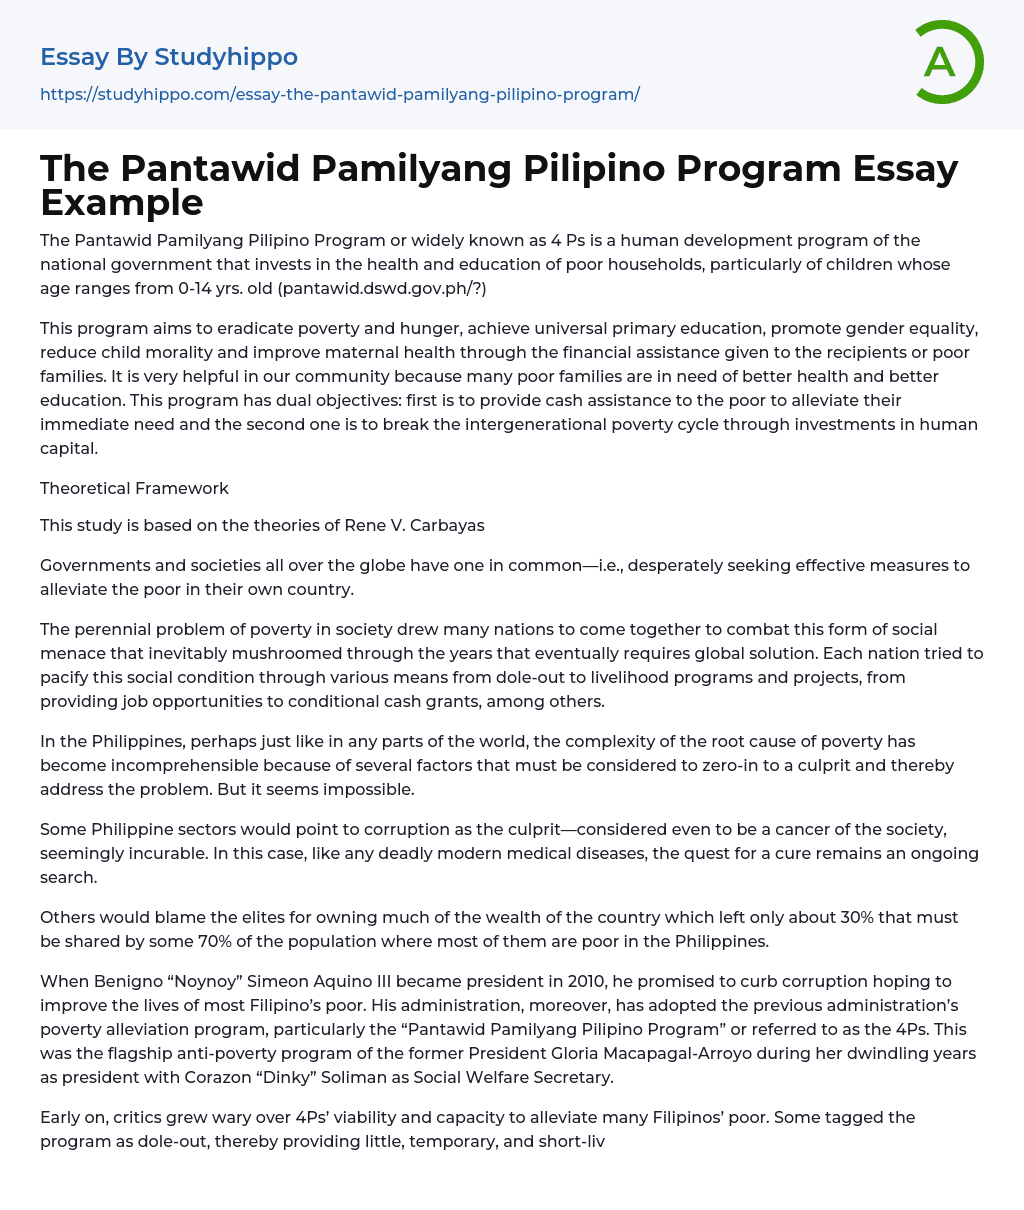 The Pantawid Pamilyang Pilipino Program Essay Example